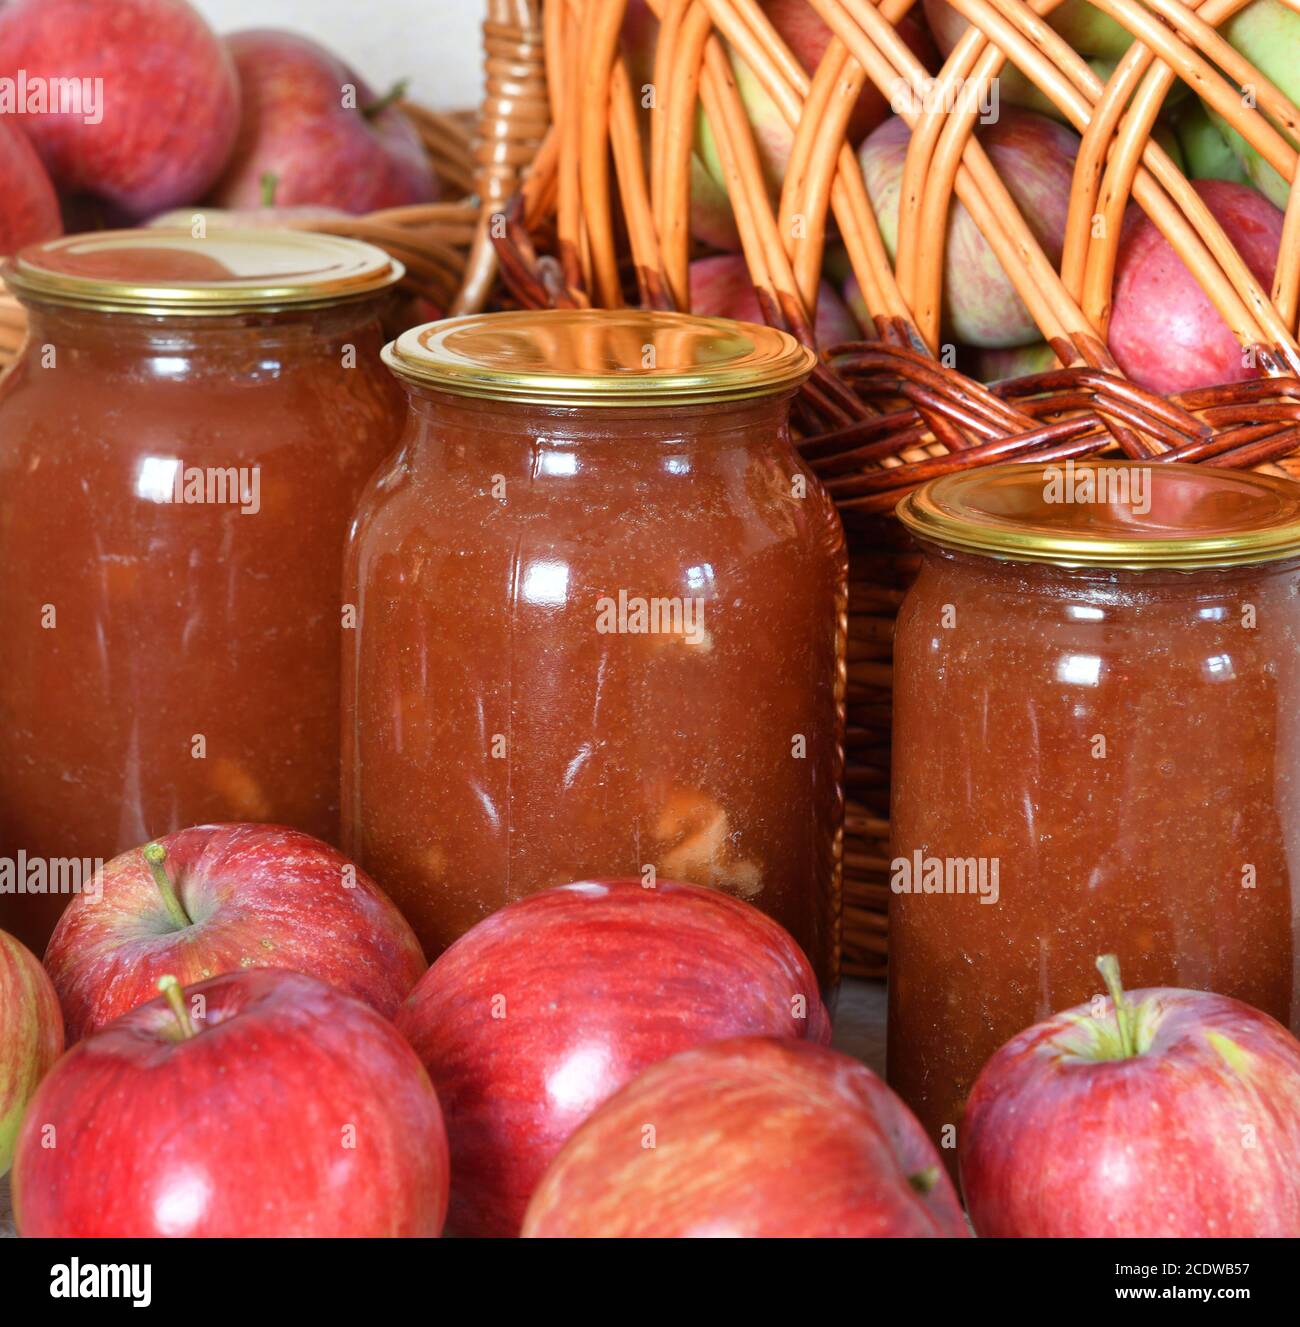 marmellata di mele in vasi di vetro e un sacco di mele fresche Foto Stock